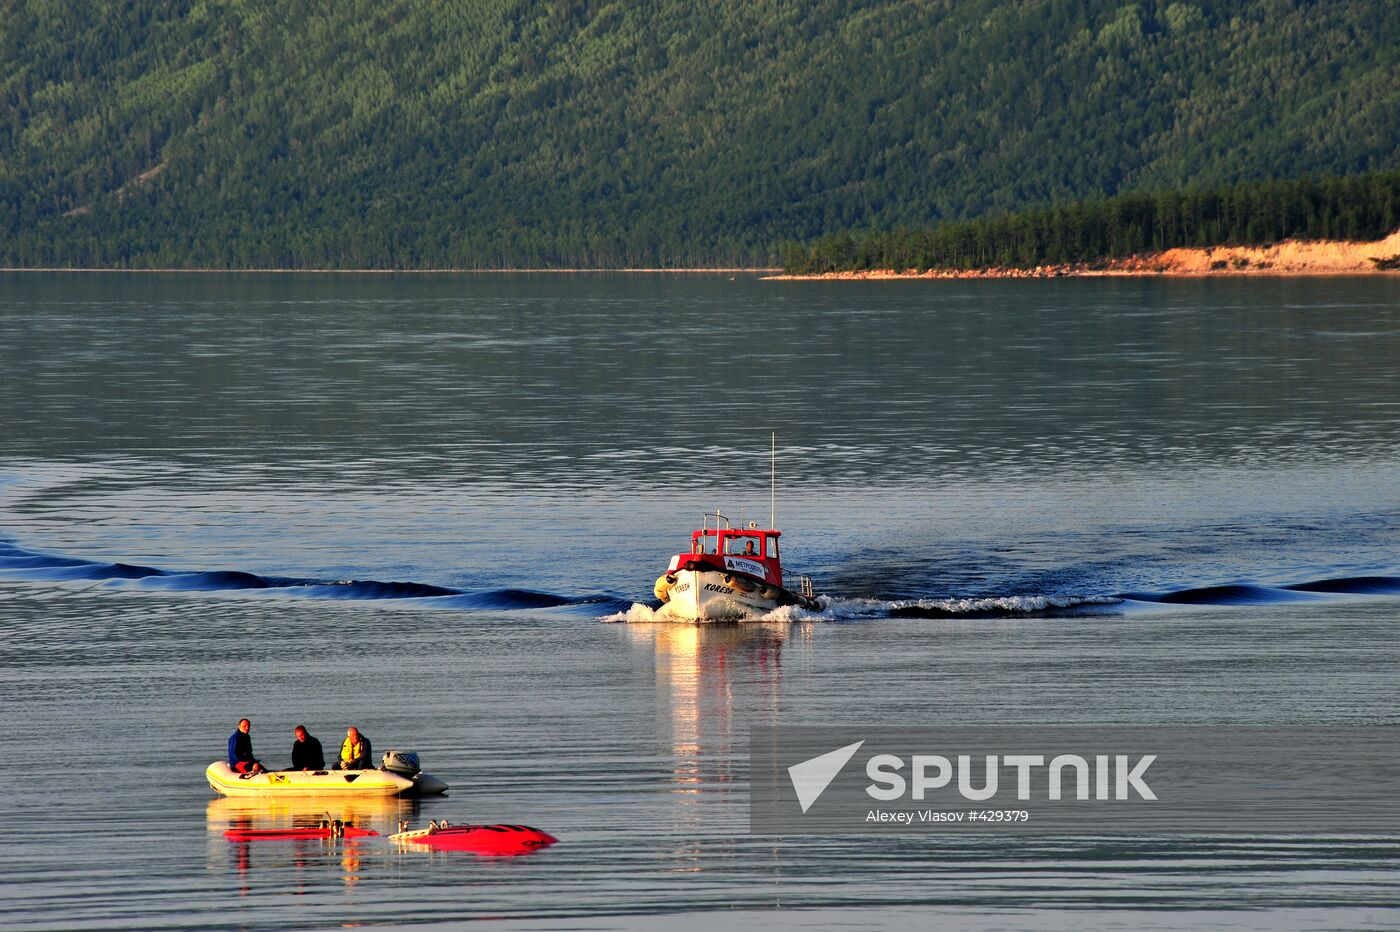 Mir-1 and Mir-2 submersibles on Lake Baikal